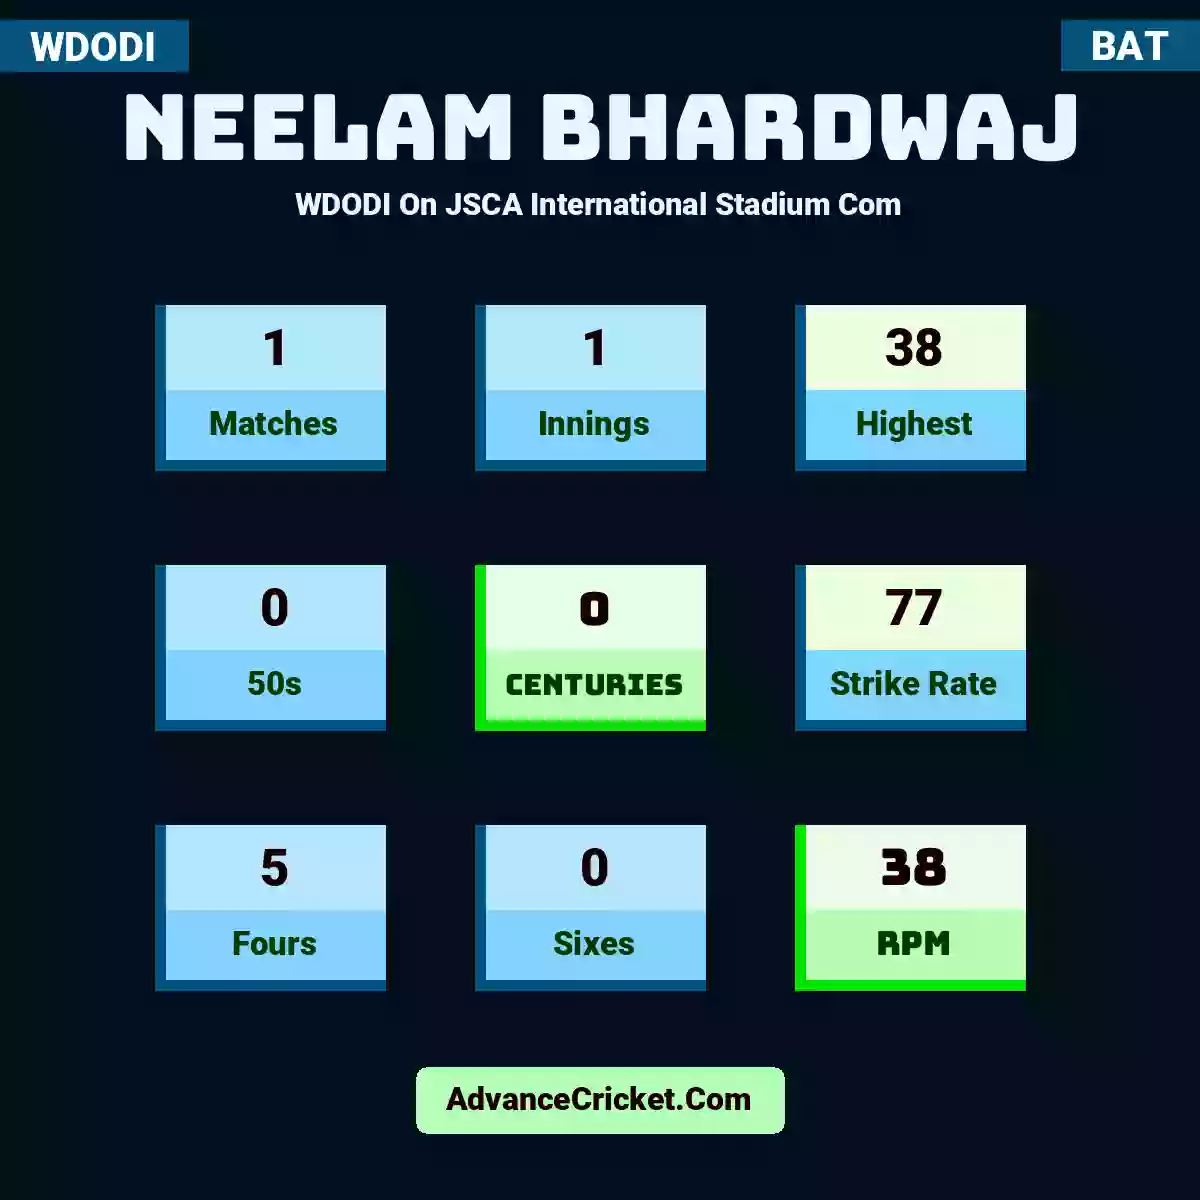 Neelam Bhardwaj WDODI  On JSCA International Stadium Com, Neelam Bhardwaj played 1 matches, scored 38 runs as highest, 0 half-centuries, and 0 centuries, with a strike rate of 77. N.Bhardwaj hit 5 fours and 0 sixes, with an RPM of 38.